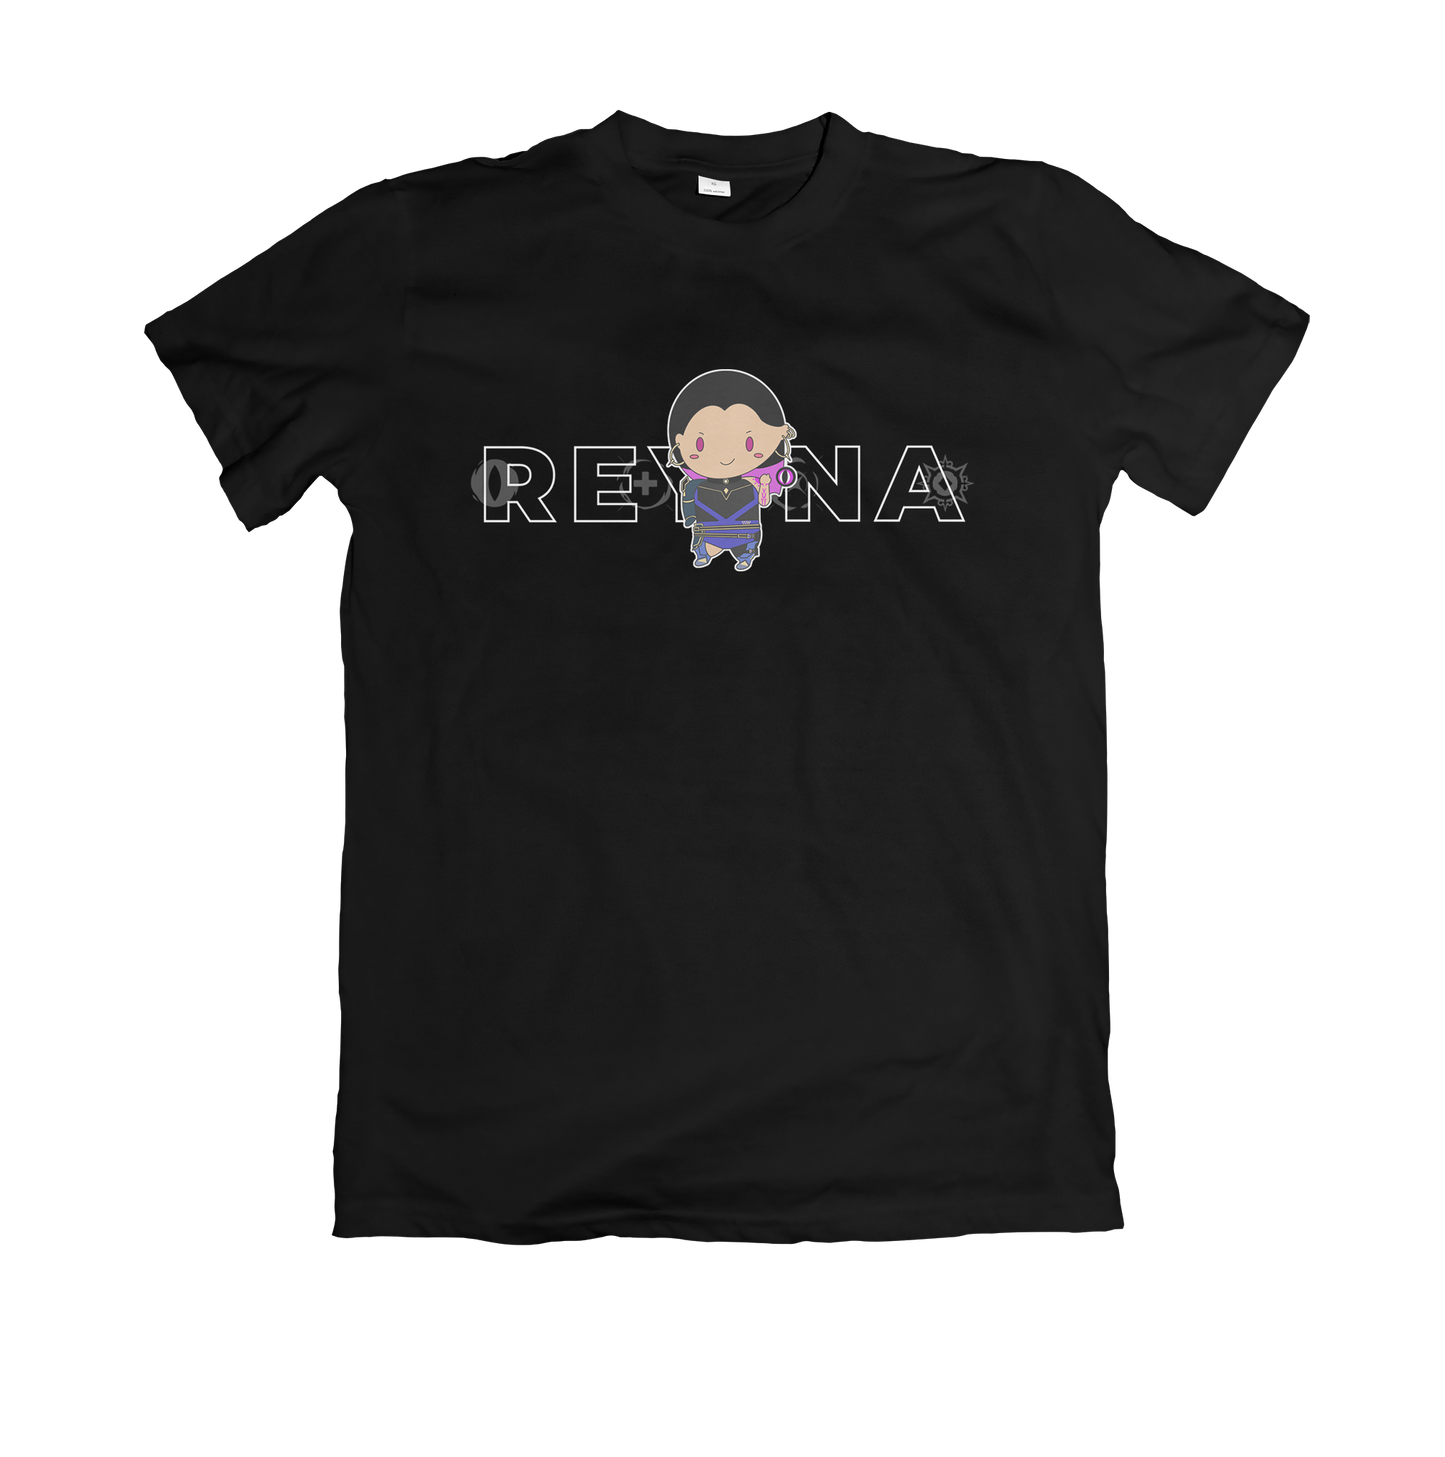 Reyna shirt